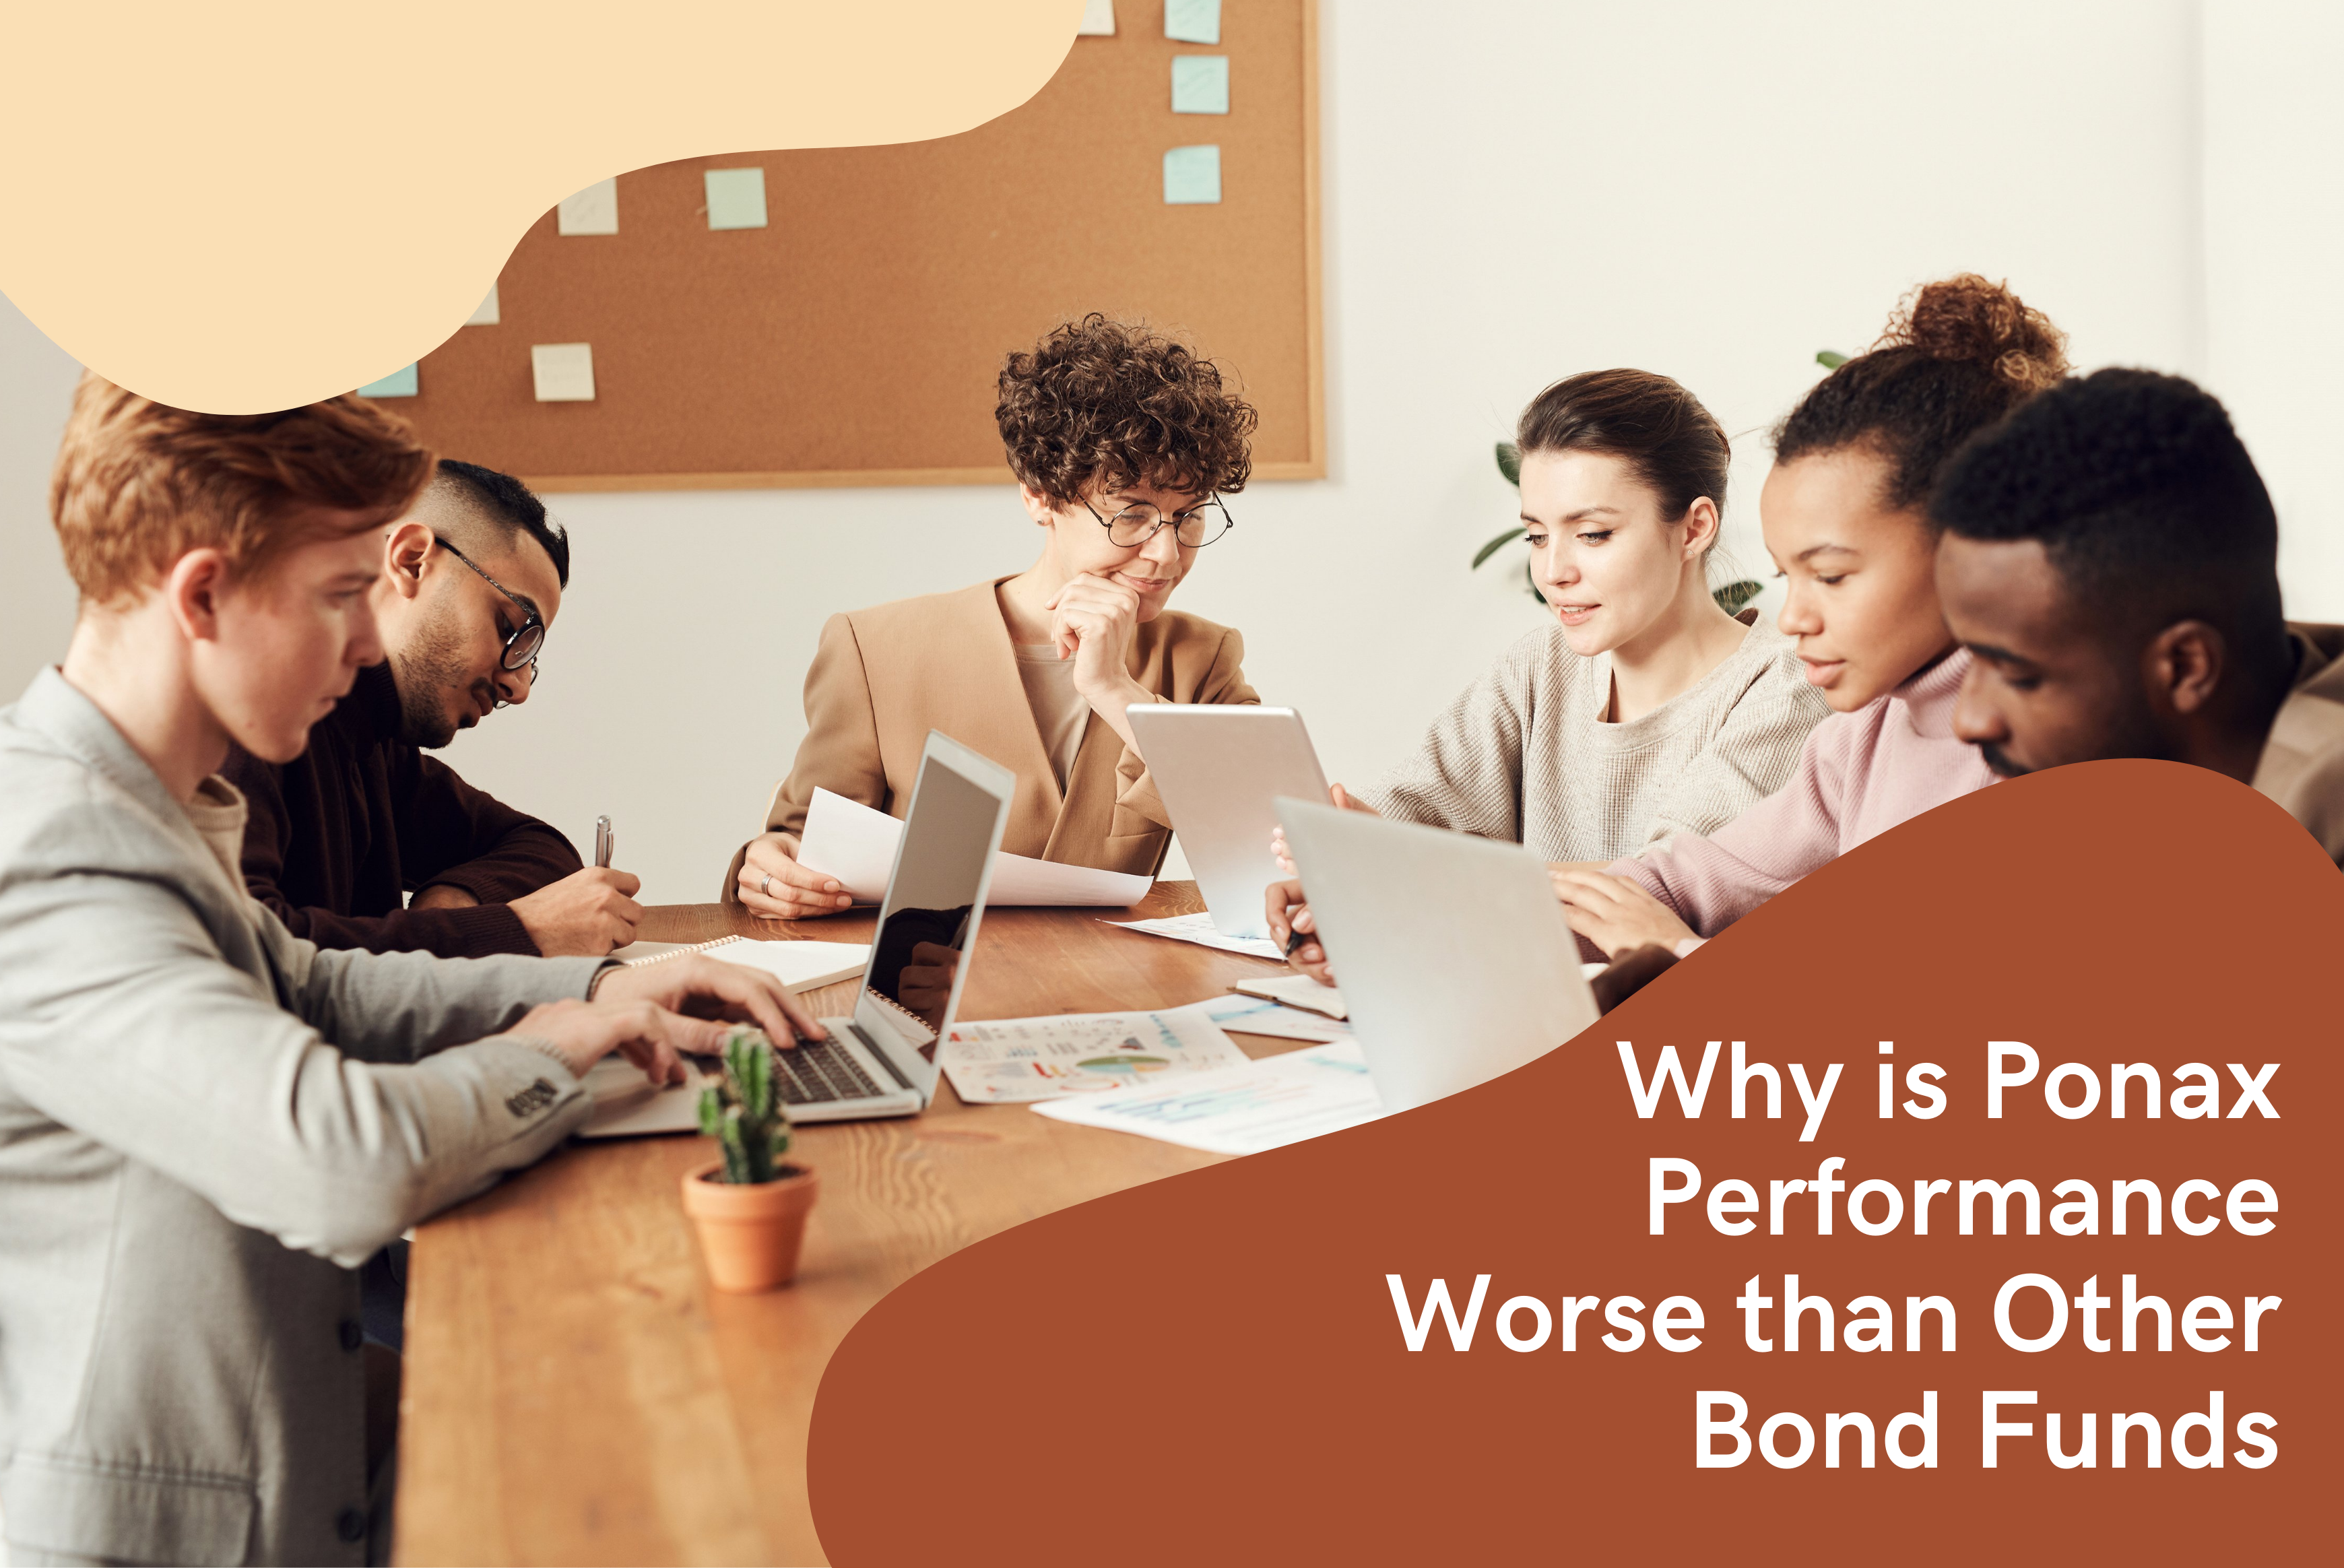 performance bond - what is Ponax Performance - team having a meeting